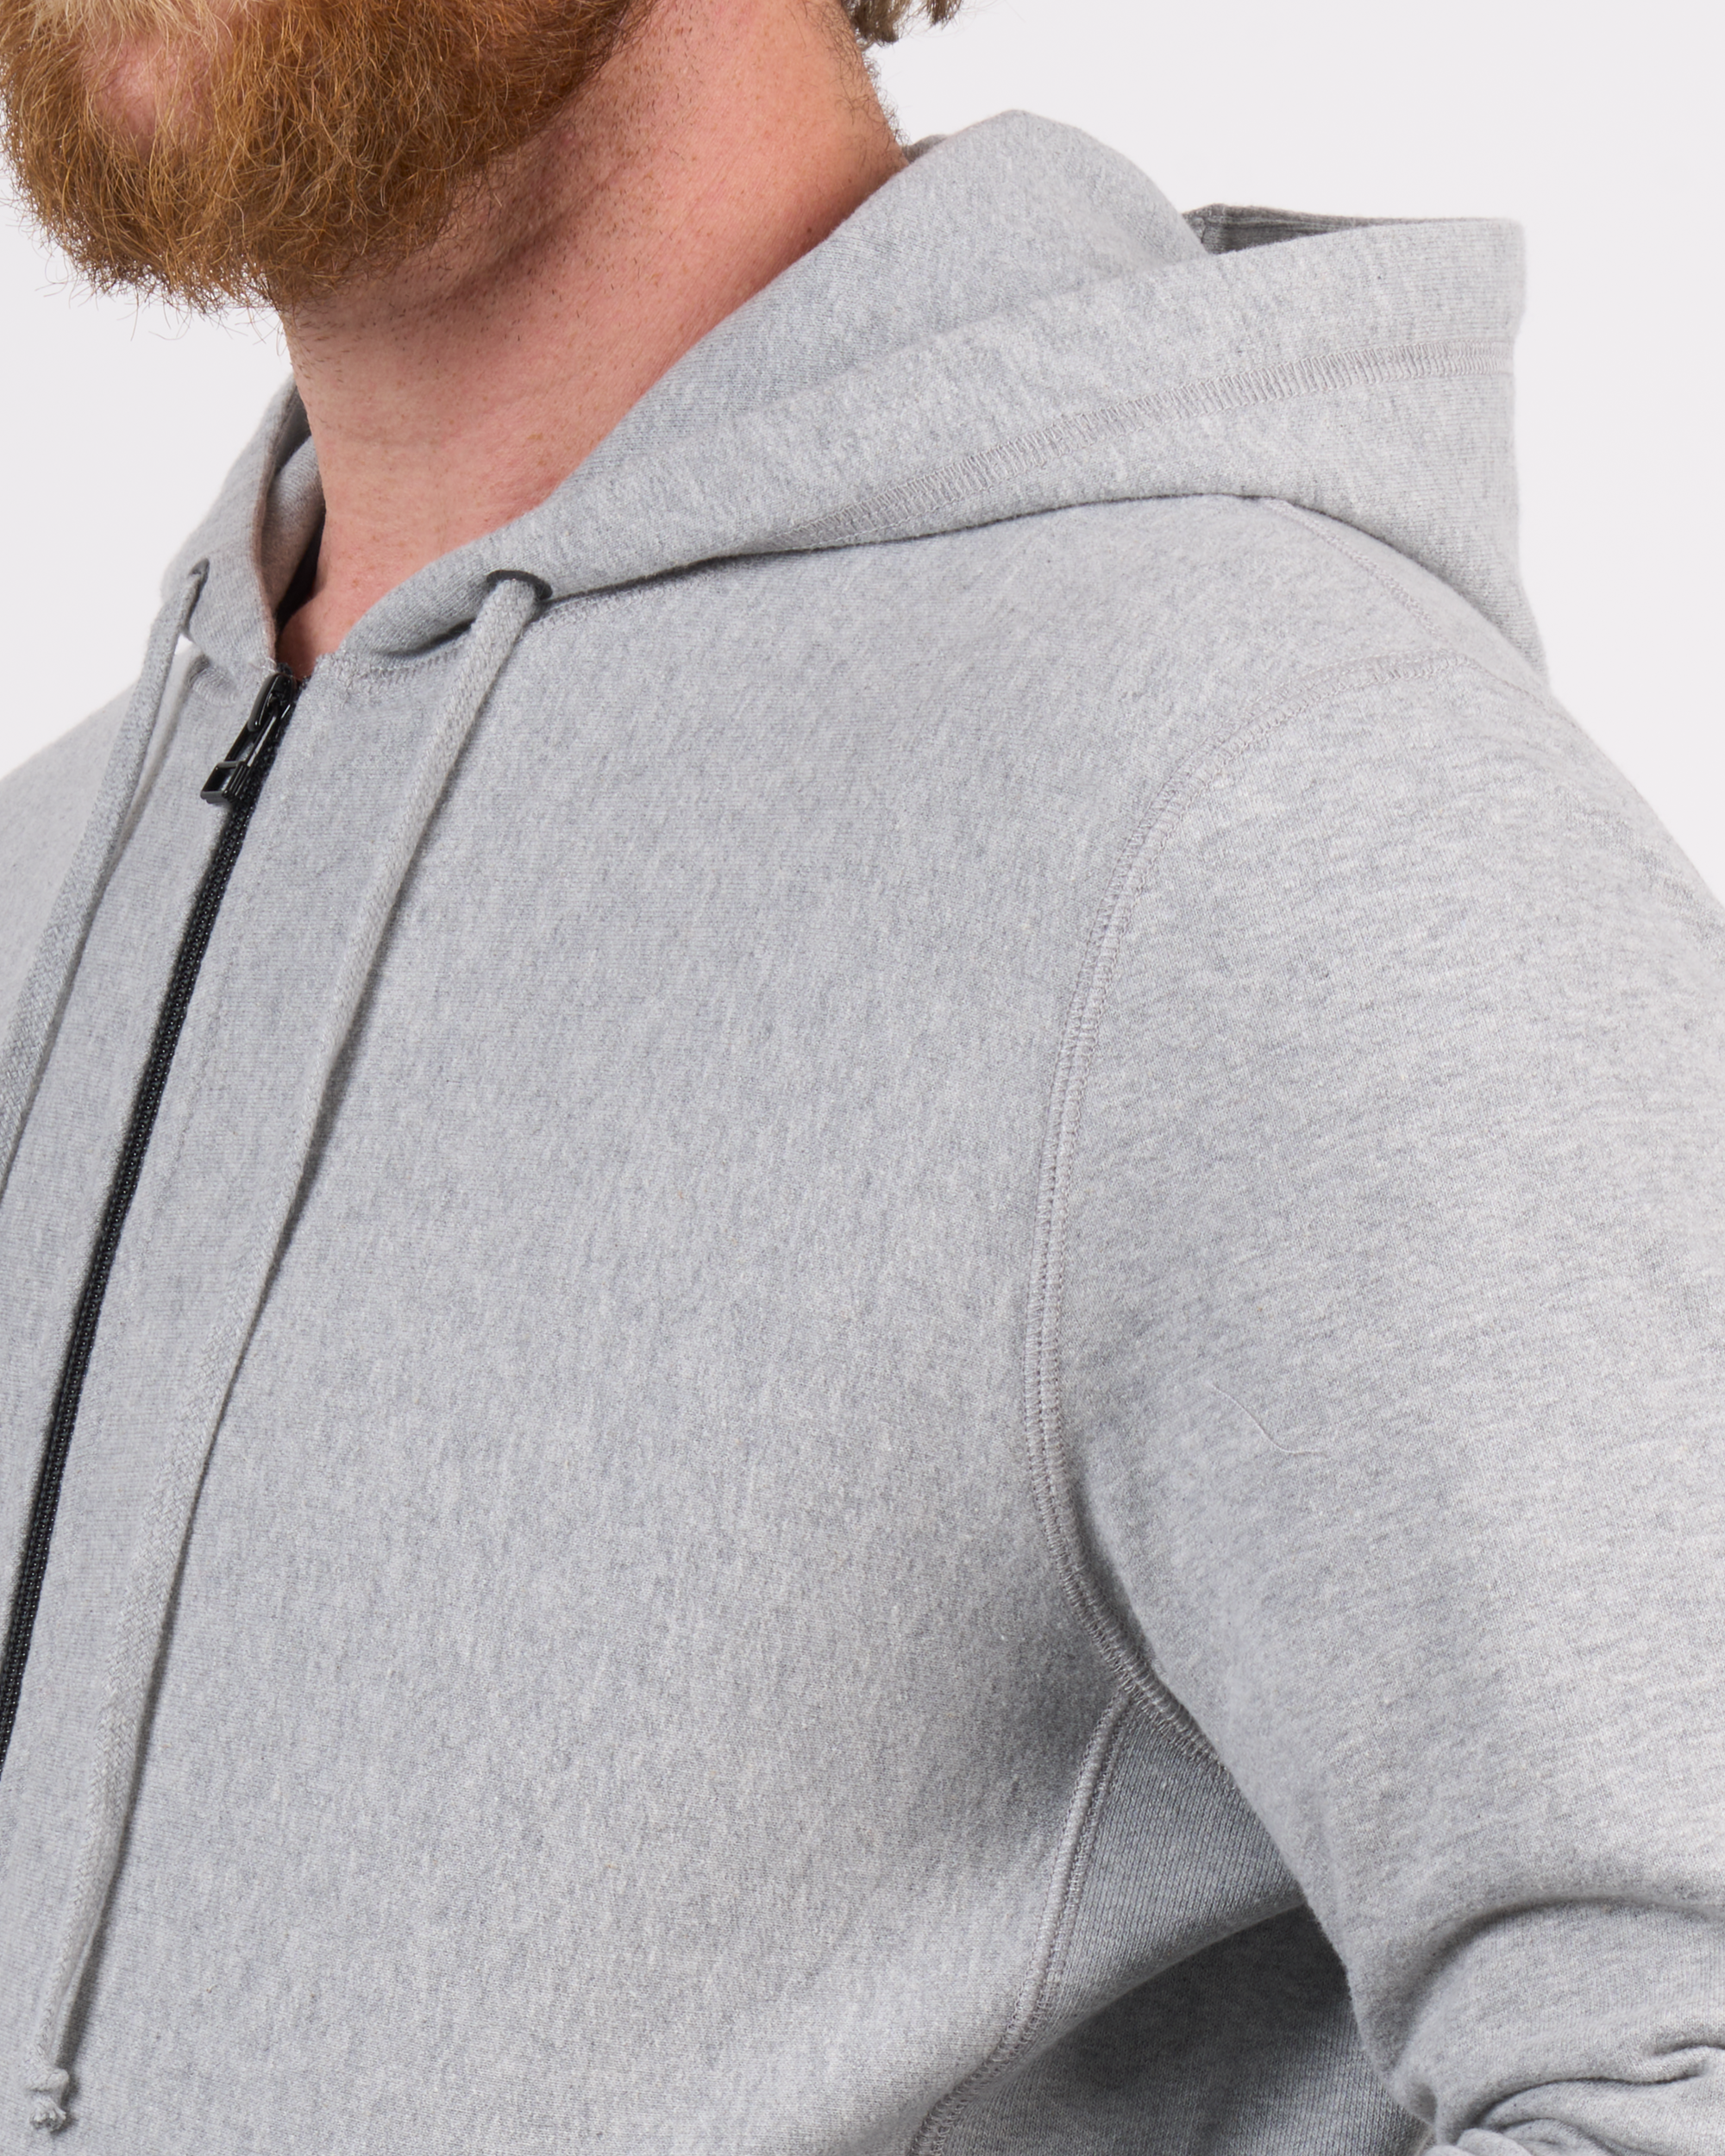 Foreign Rider Co Organic Cotton Grey Zip Hoodie Sweater Shoulder Detail